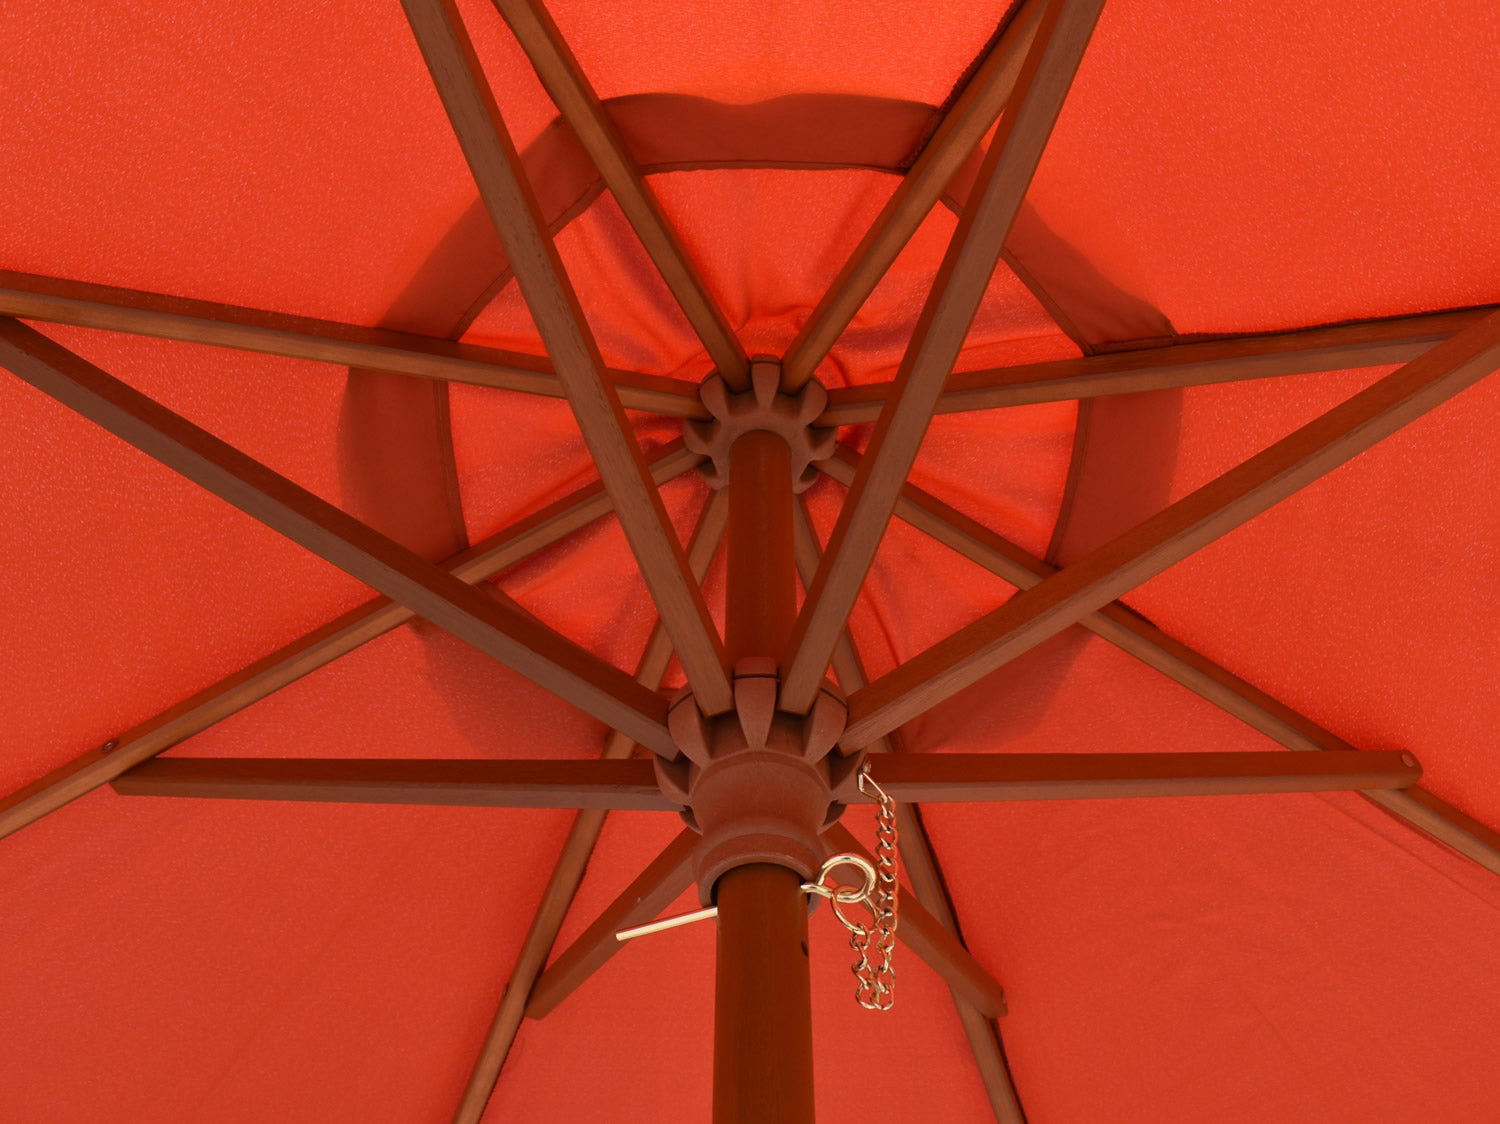 2m Octagonal parasol underside wooden struts